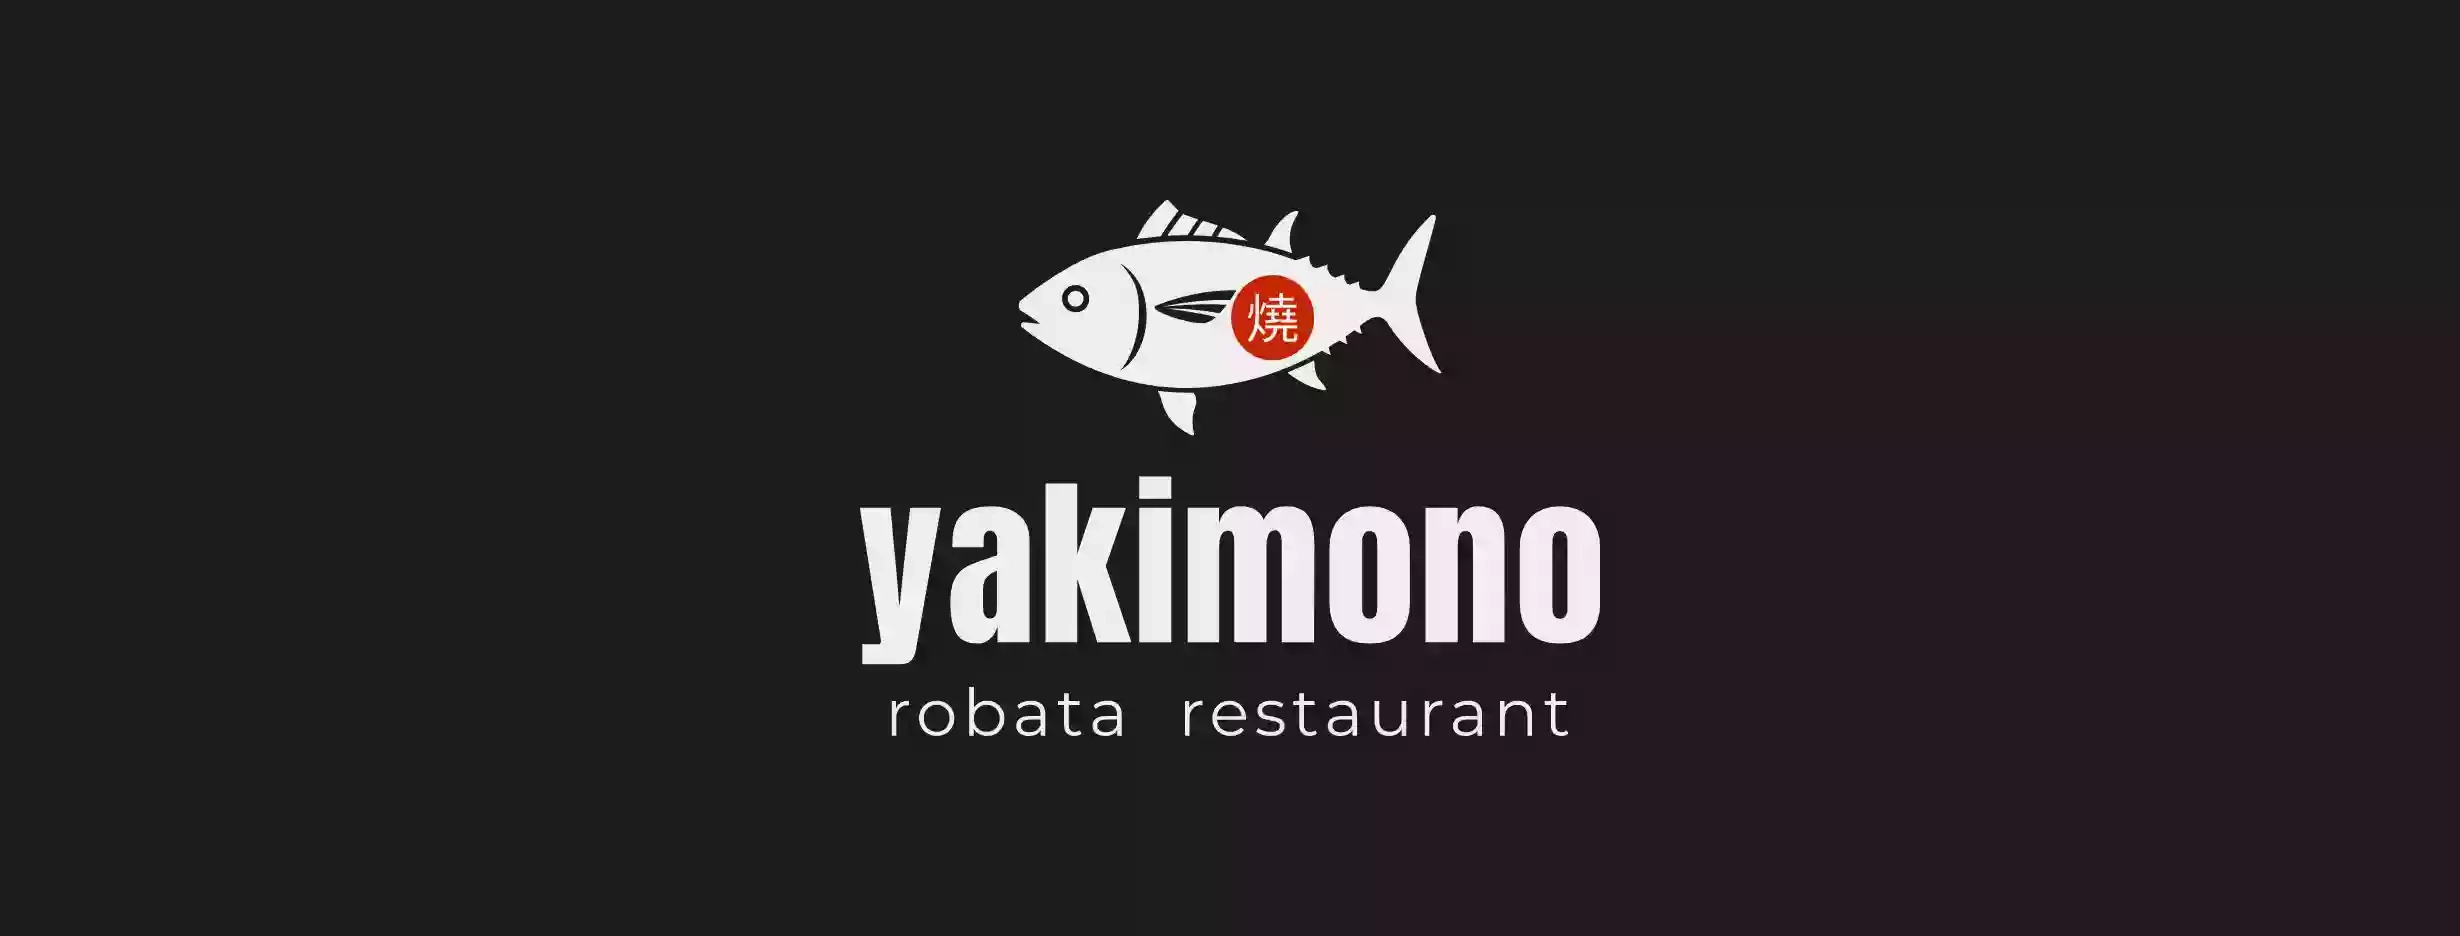 Yakimono Robata Restaurant